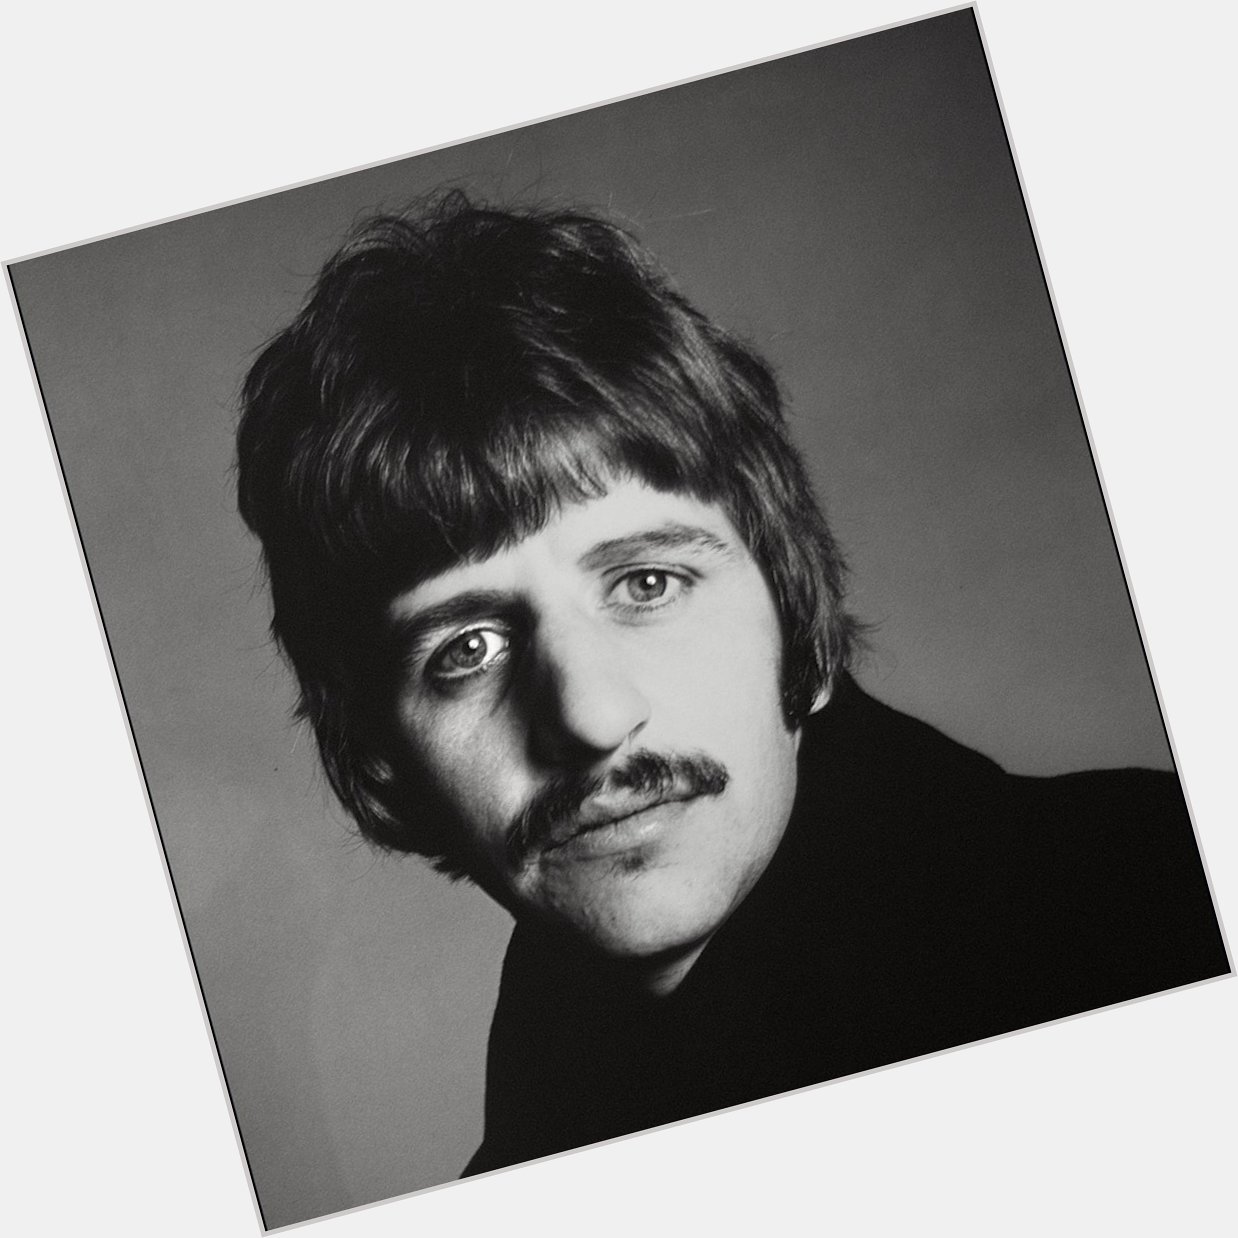 Happy 78th Birthday Ringo Starr of The Beatles! 